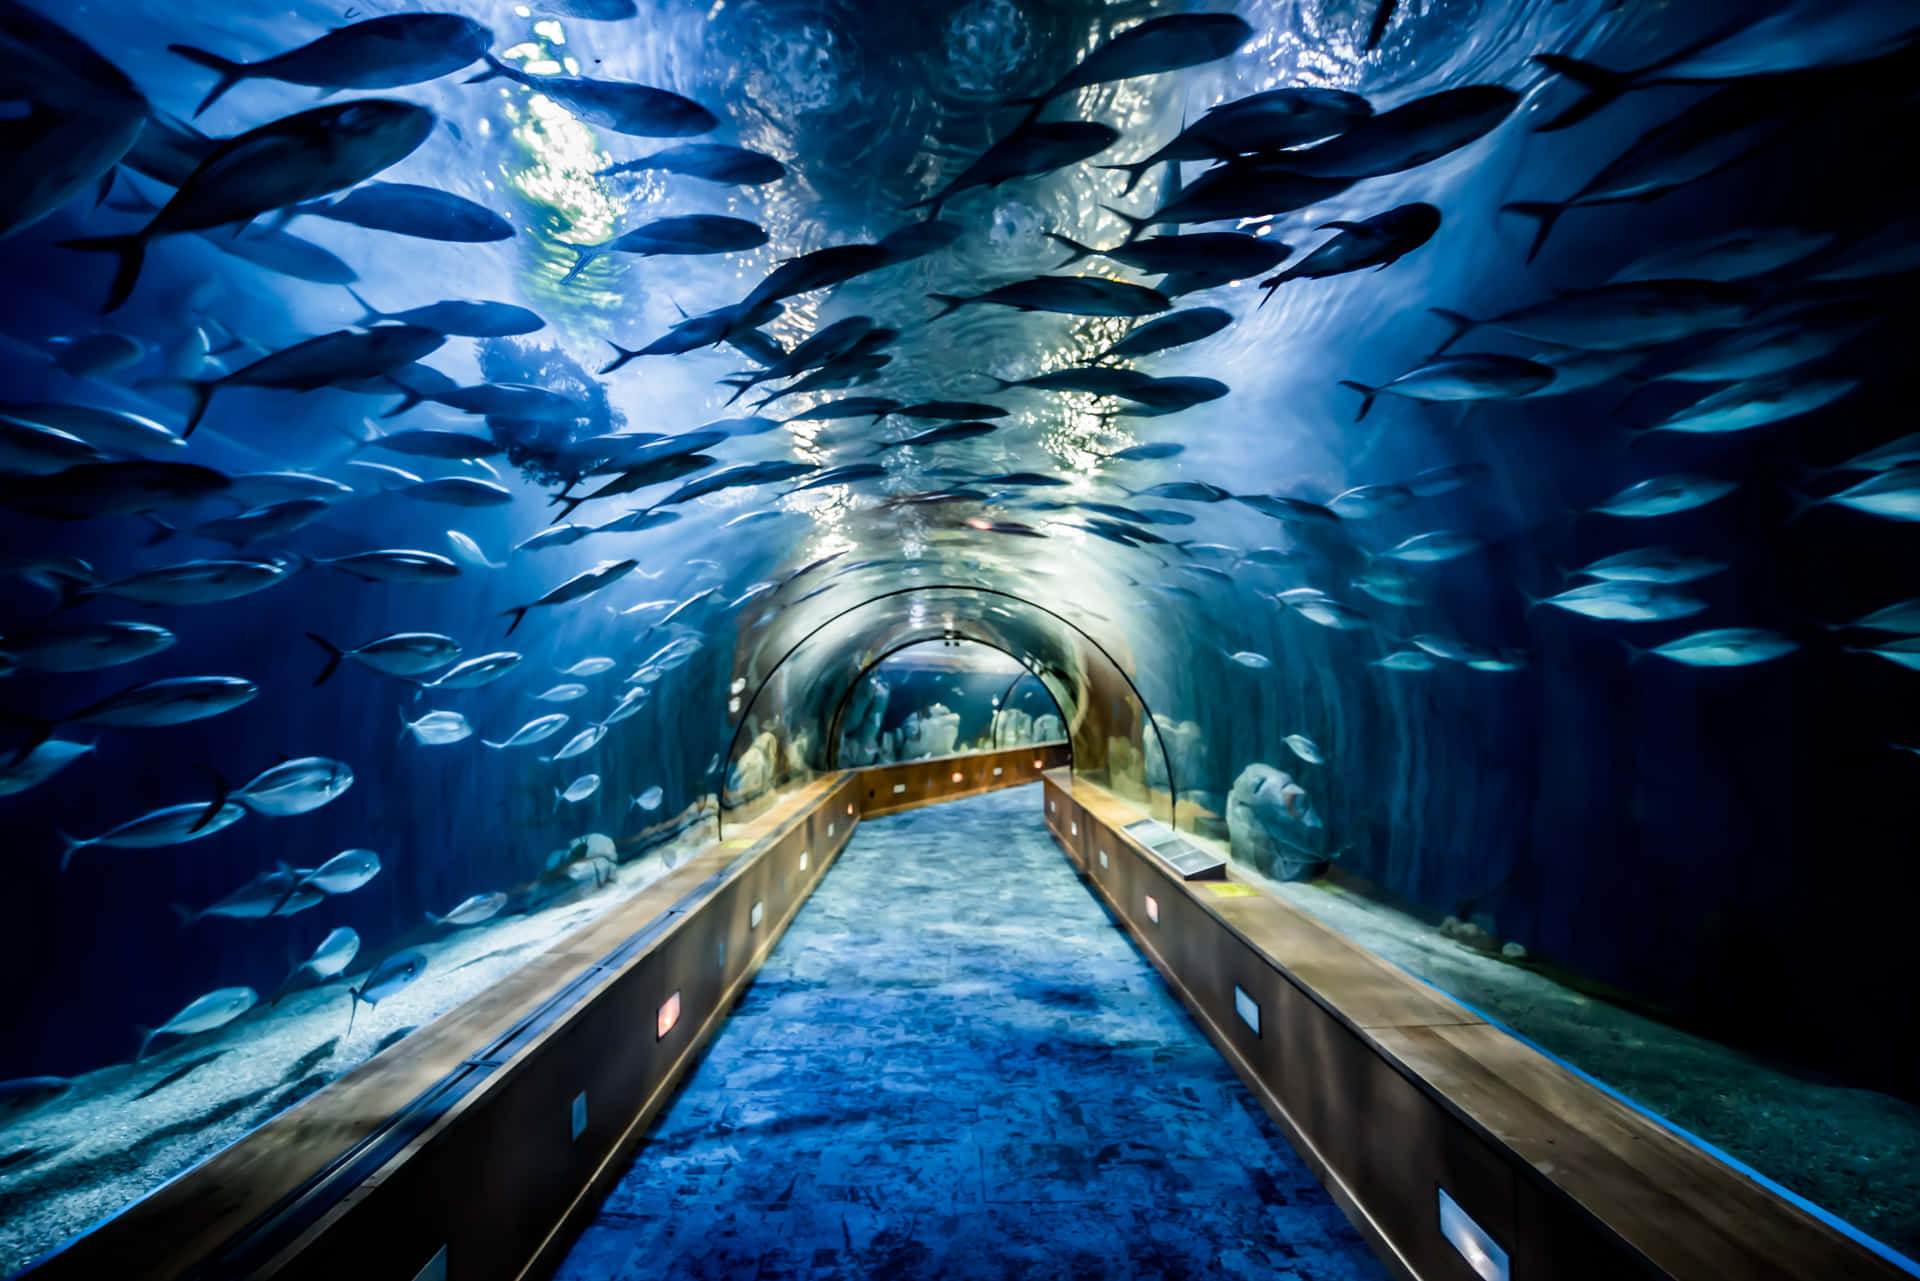 A vibrant, serene and tranquil aquarium